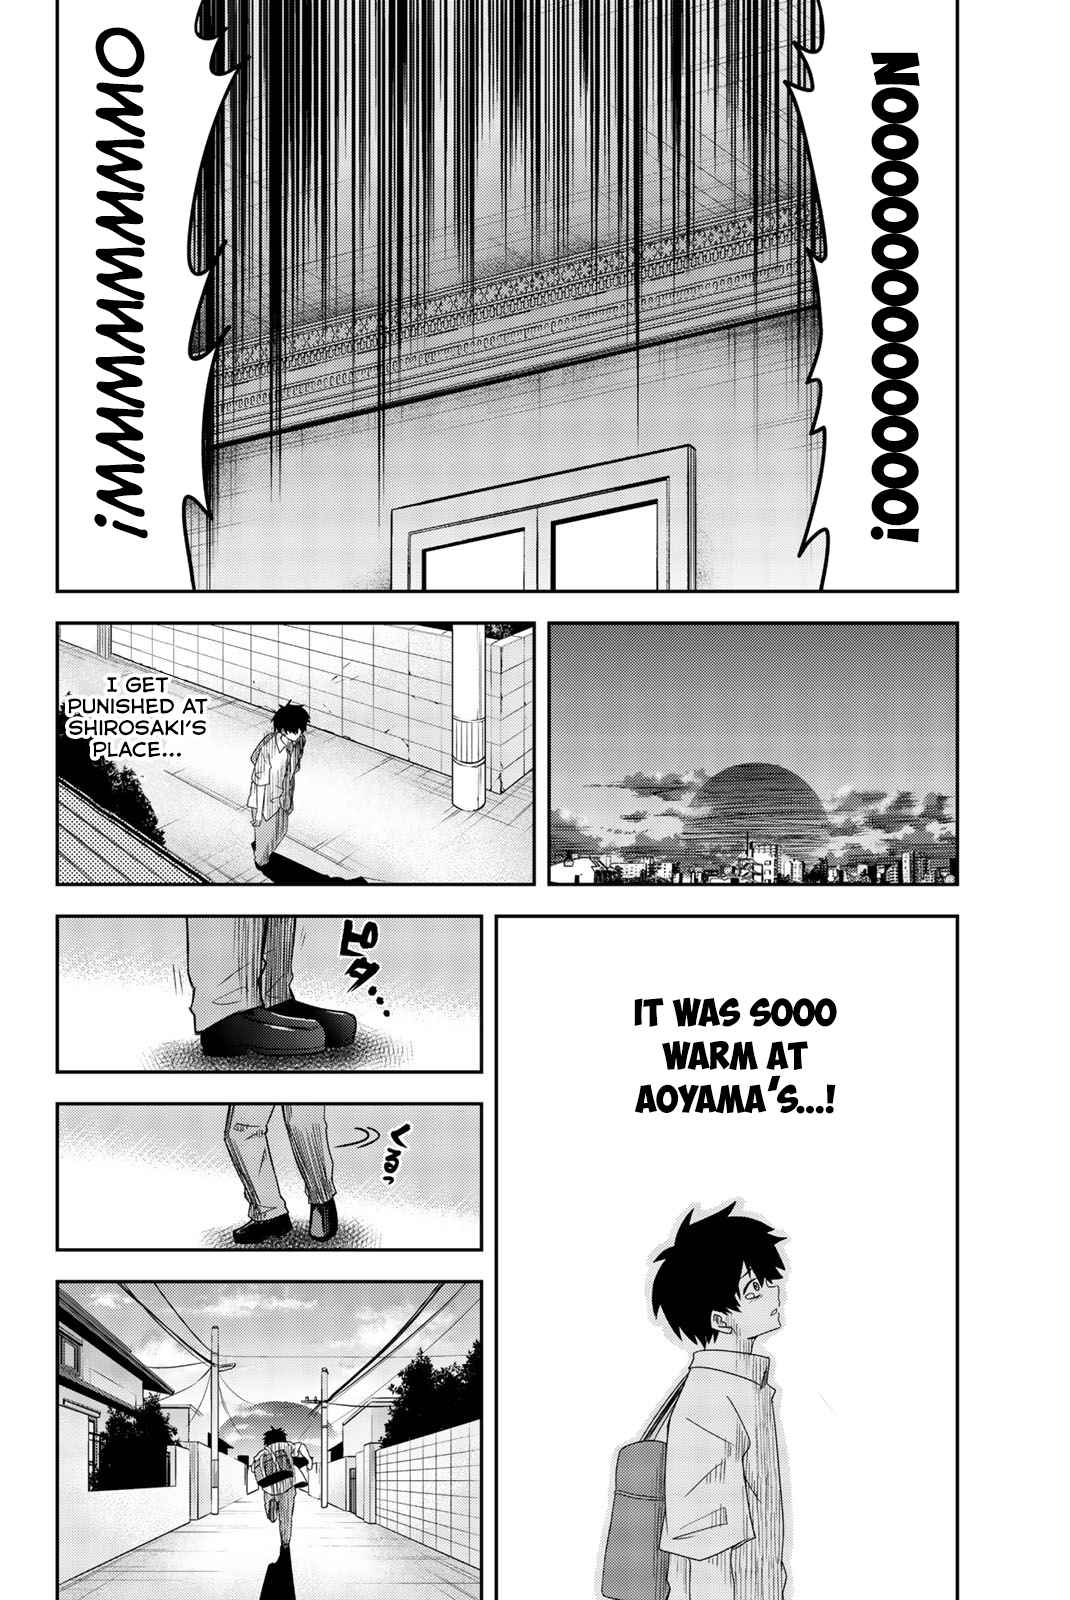 Ijimeru Yabai Yatsu Vol. 3 Ch. 23 To Aoyama's House